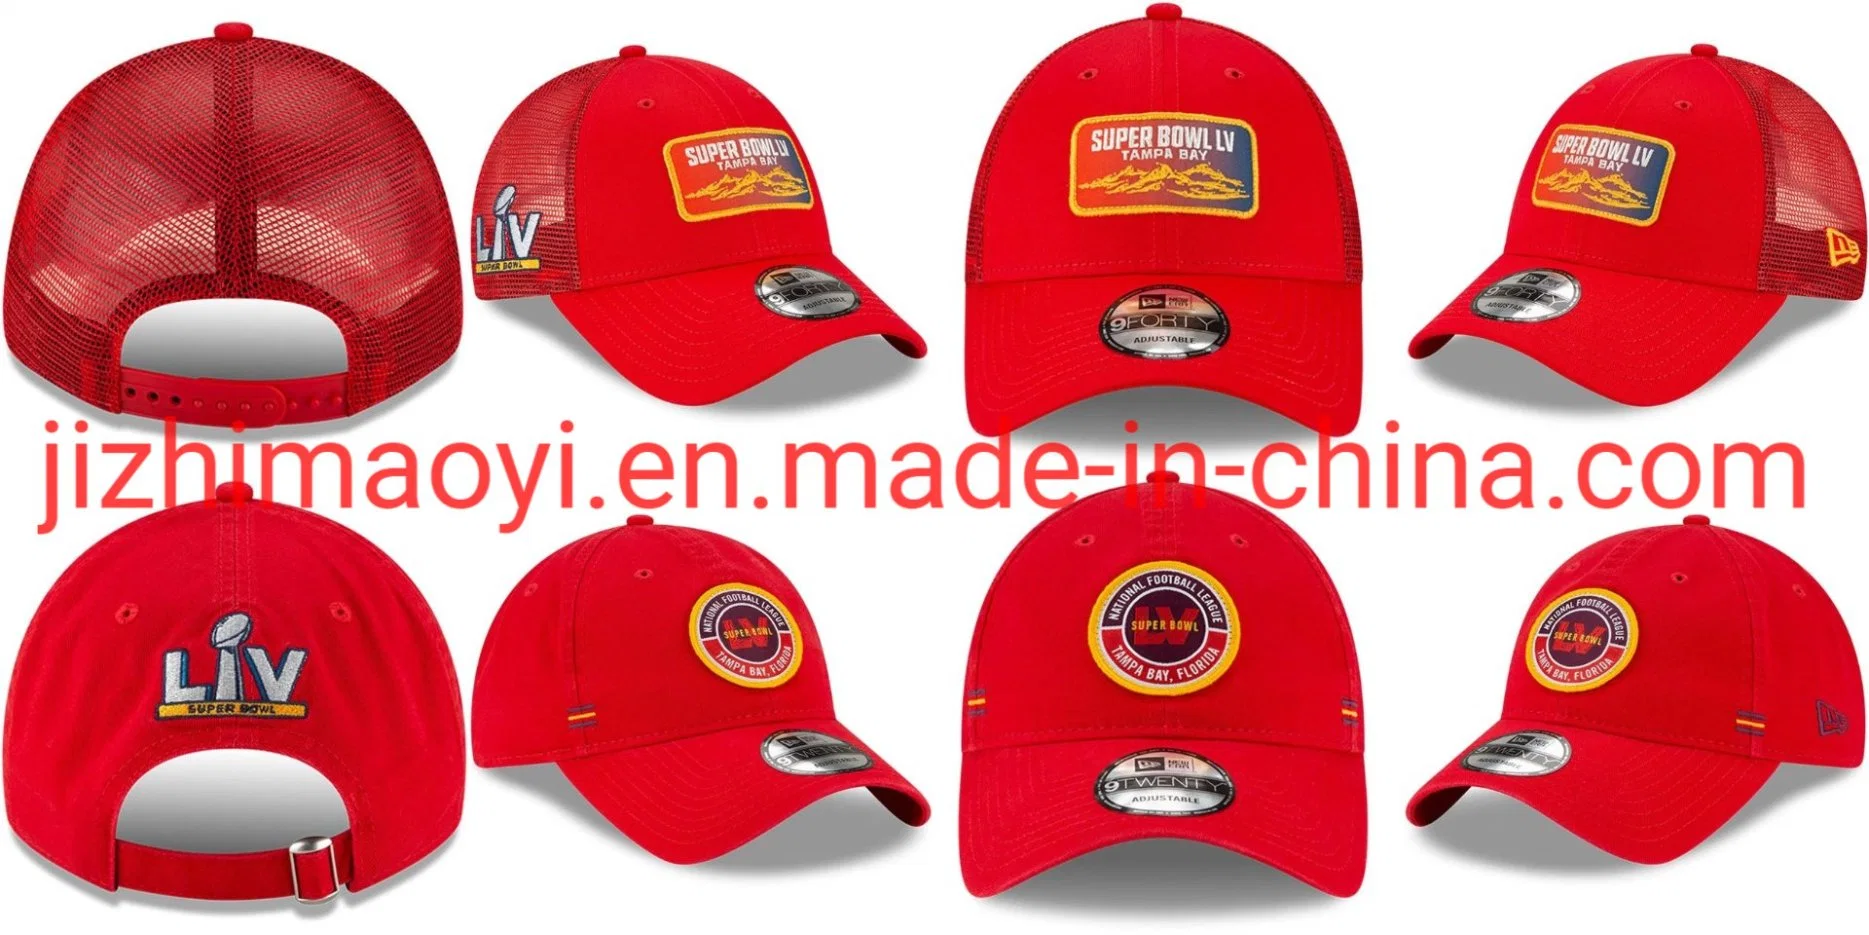 Wholesale Men's  Red Super Bowl LV Circle Patch Adjustable Snapback Hat Cap